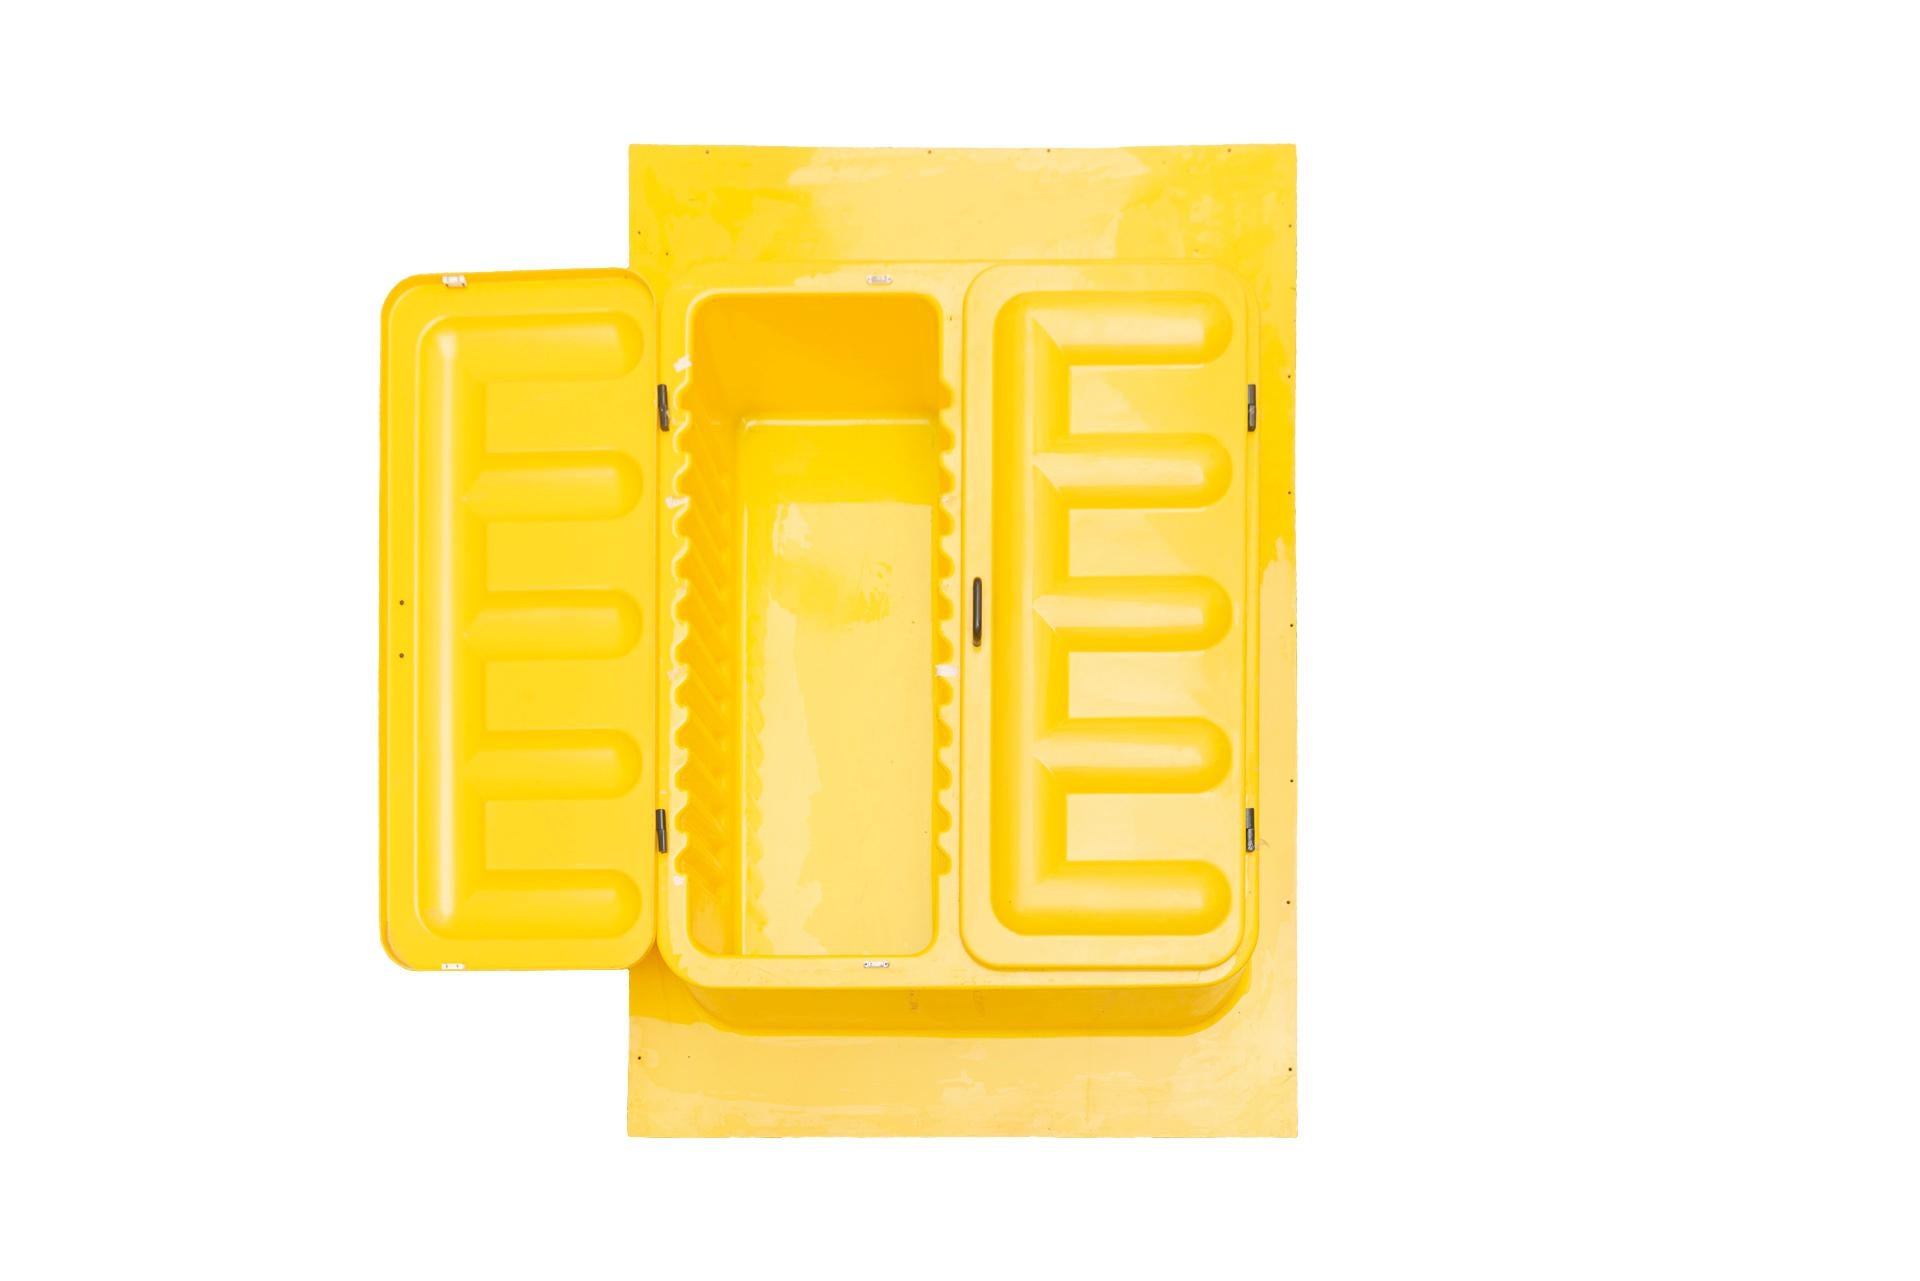 Edition Somop, important wardrobe in yellow molded plastic,
France, circa 1970.

Measures: Height 214 cm, width 165 cm, depth 40 cm.